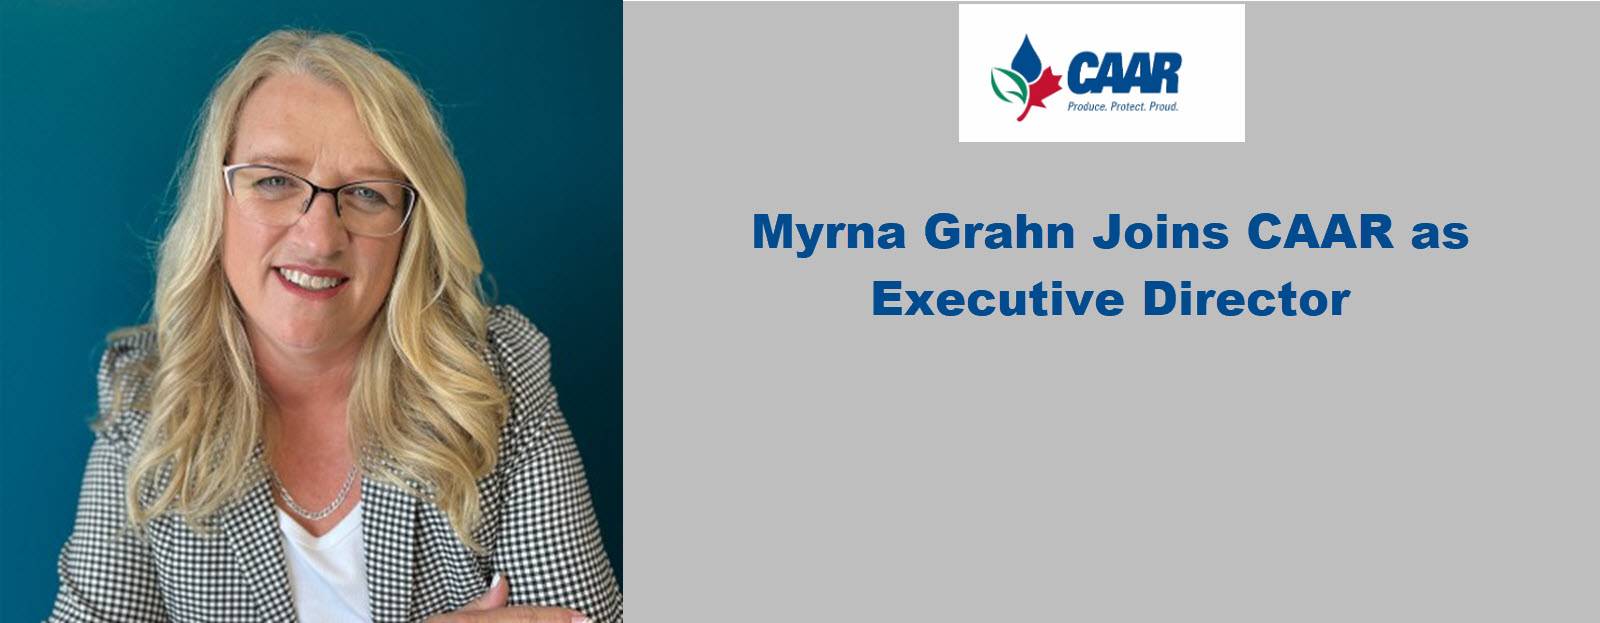 Myrna Grahn joins CAAR as Executive Director